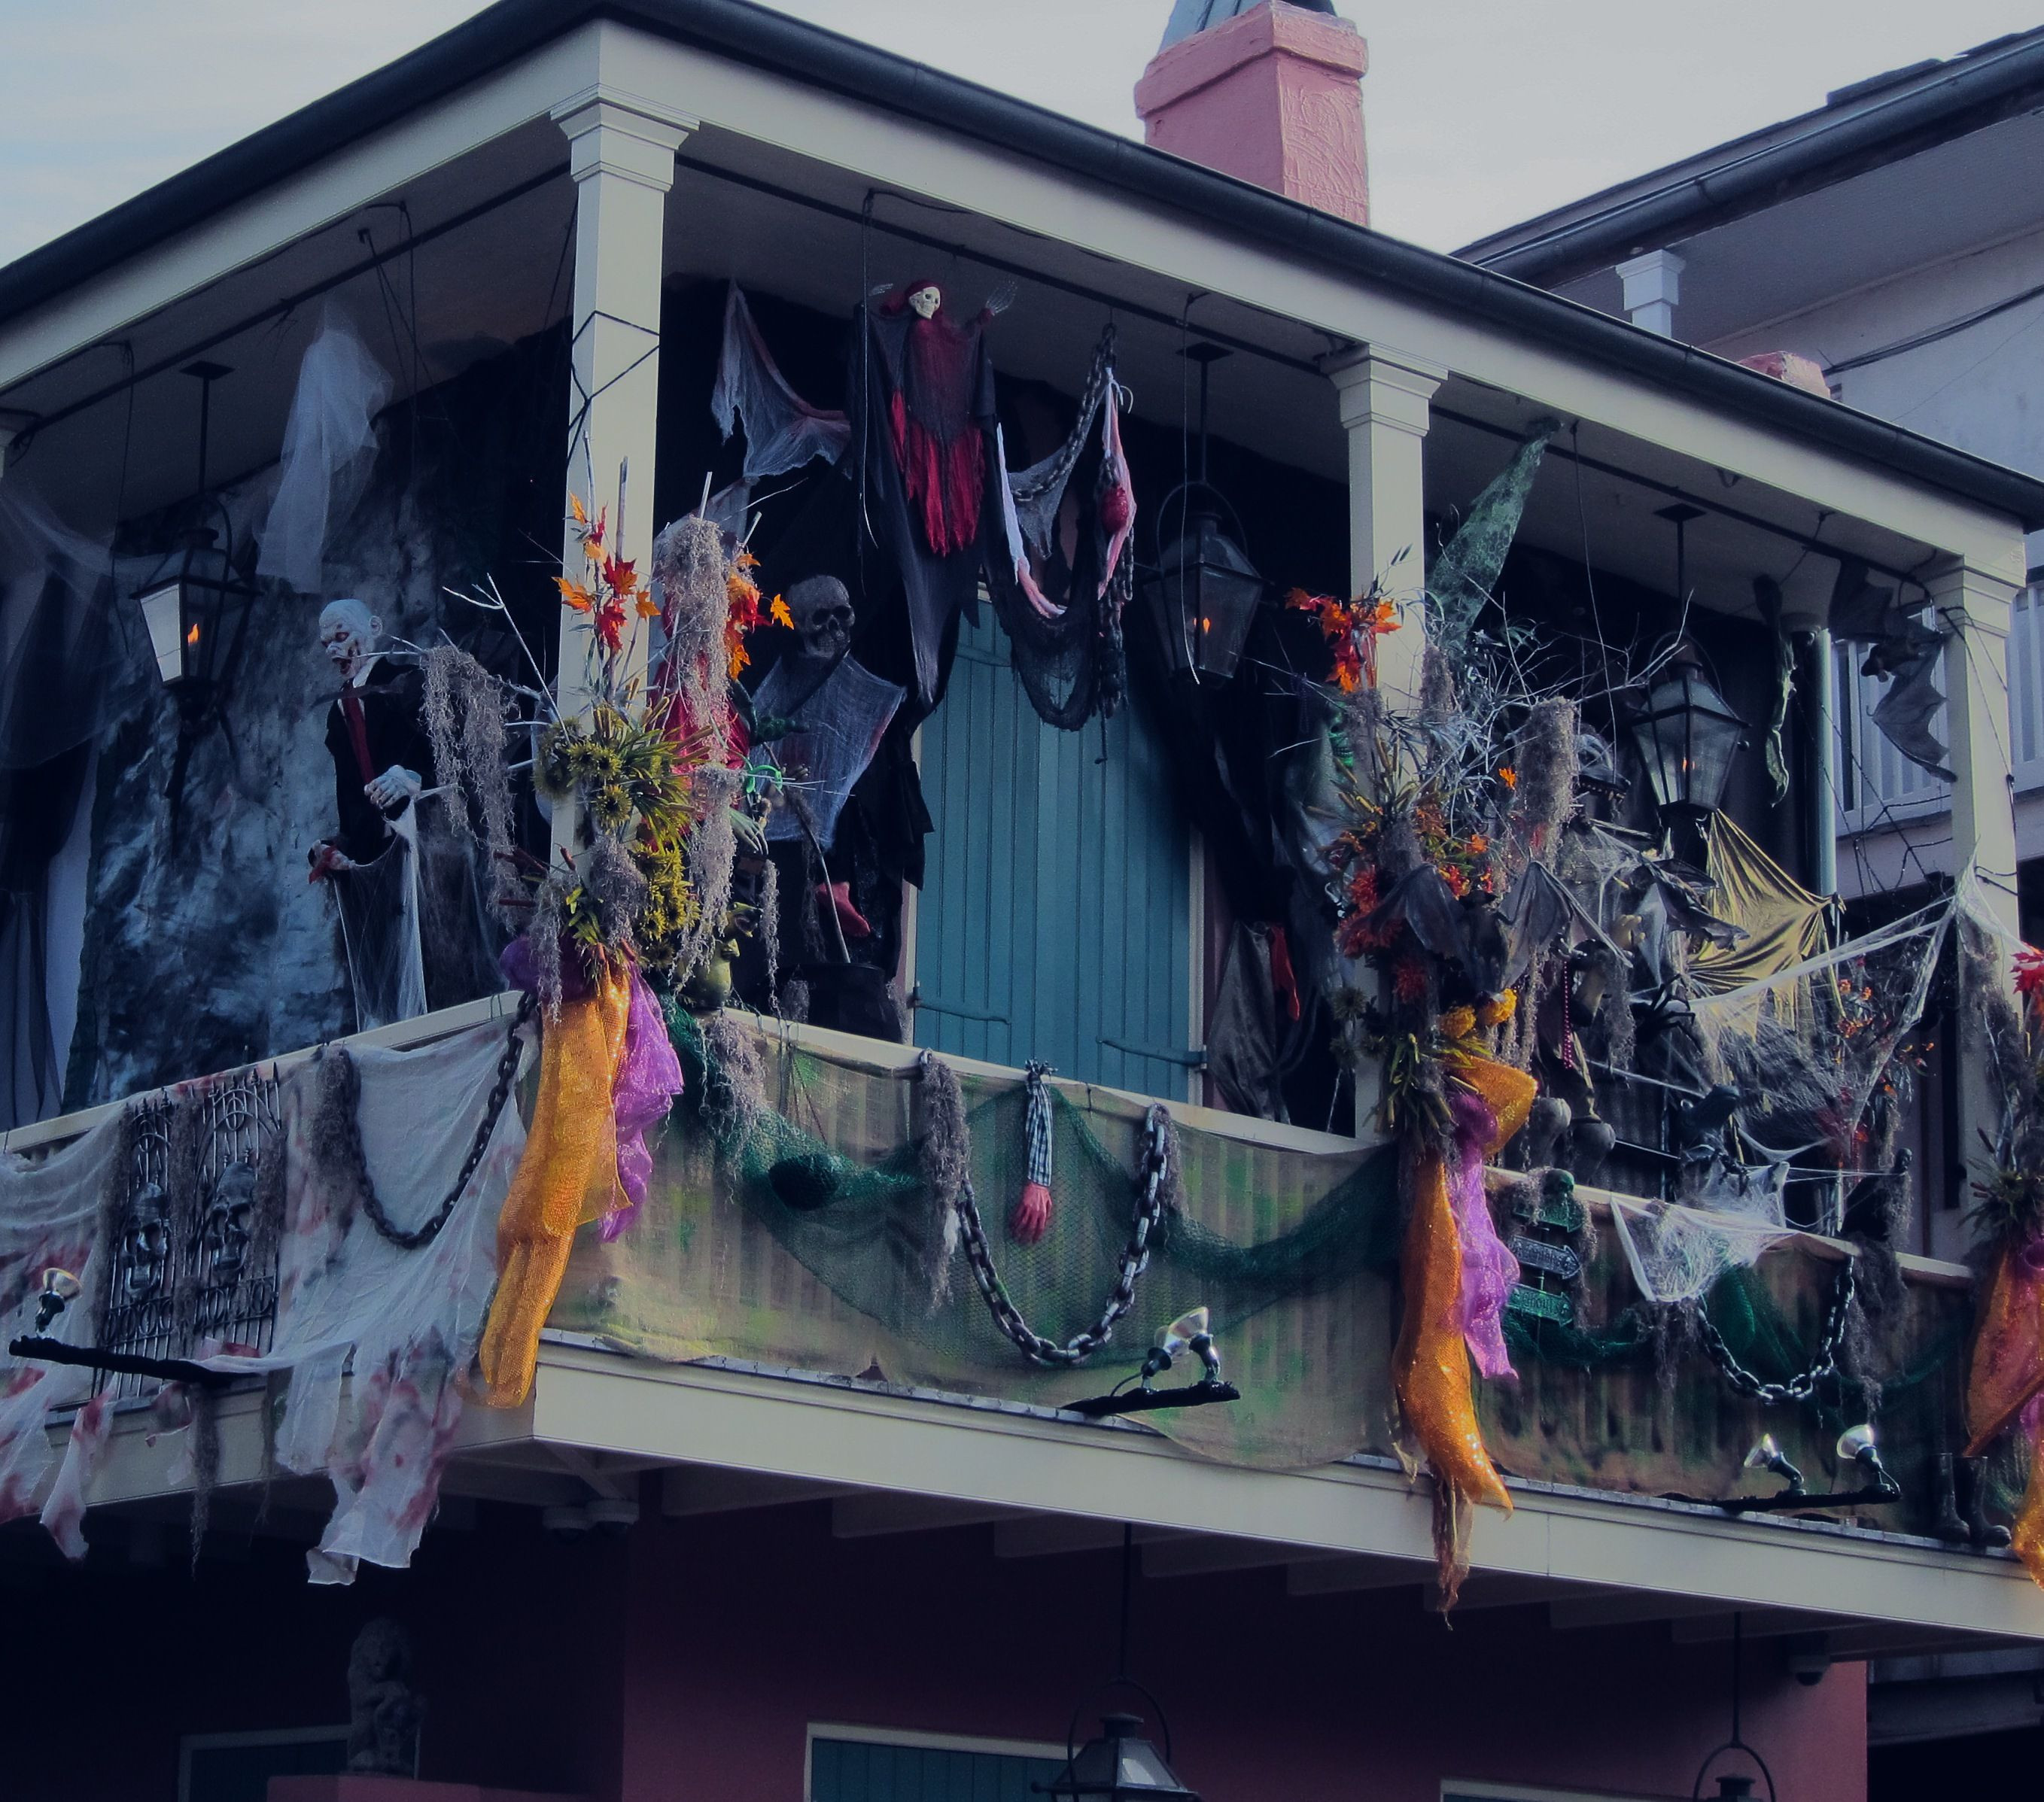 Apartment Balcony Halloween Decorations
 Halloween decorations New Orleans balcony French Quarter